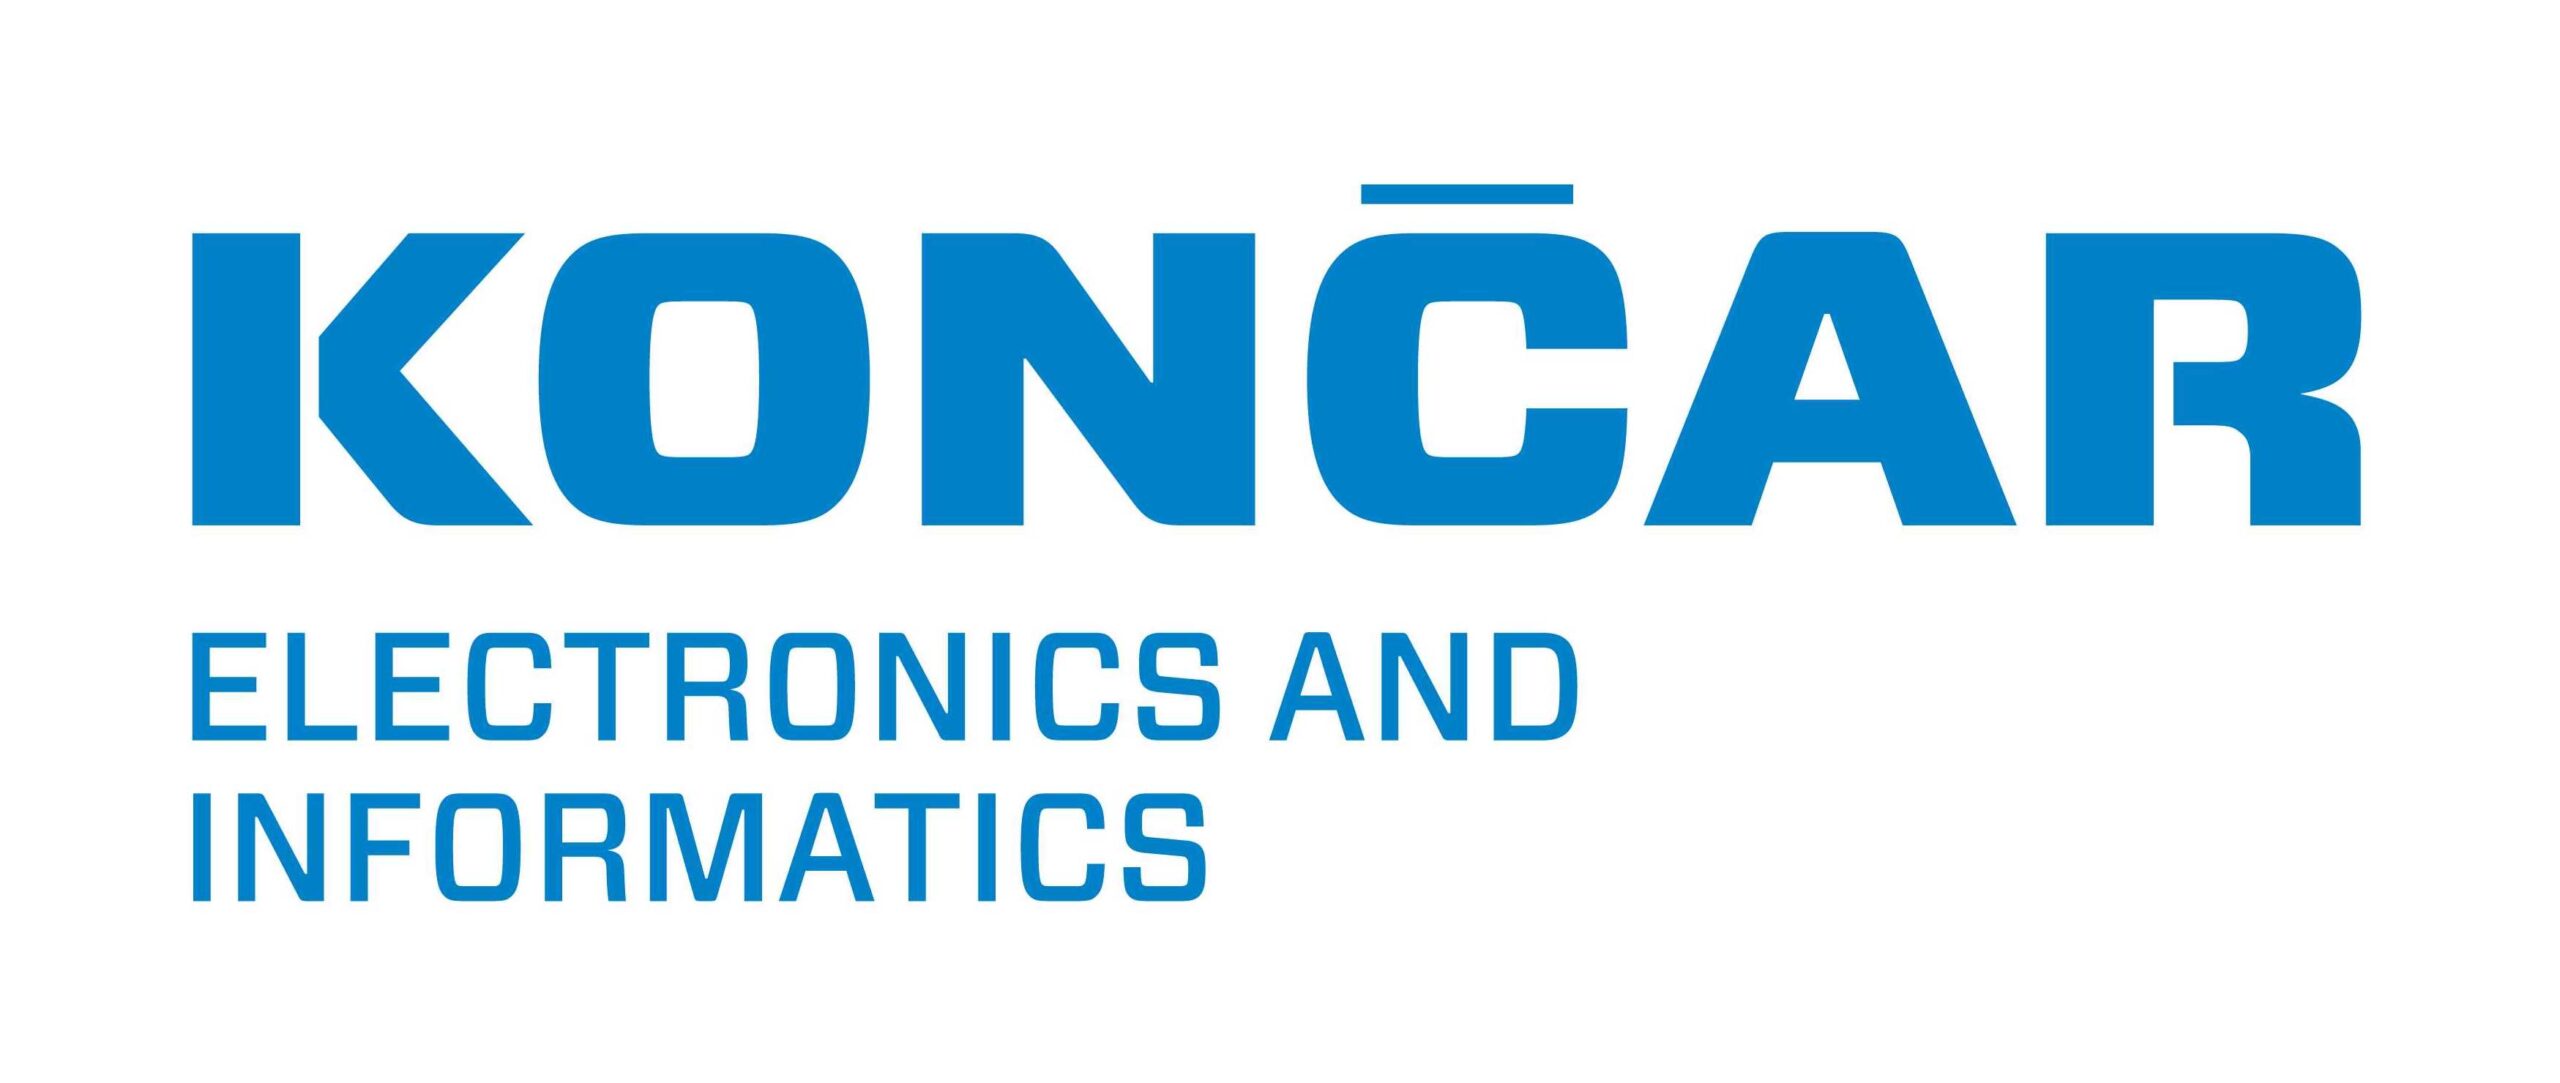 New Koncar logo